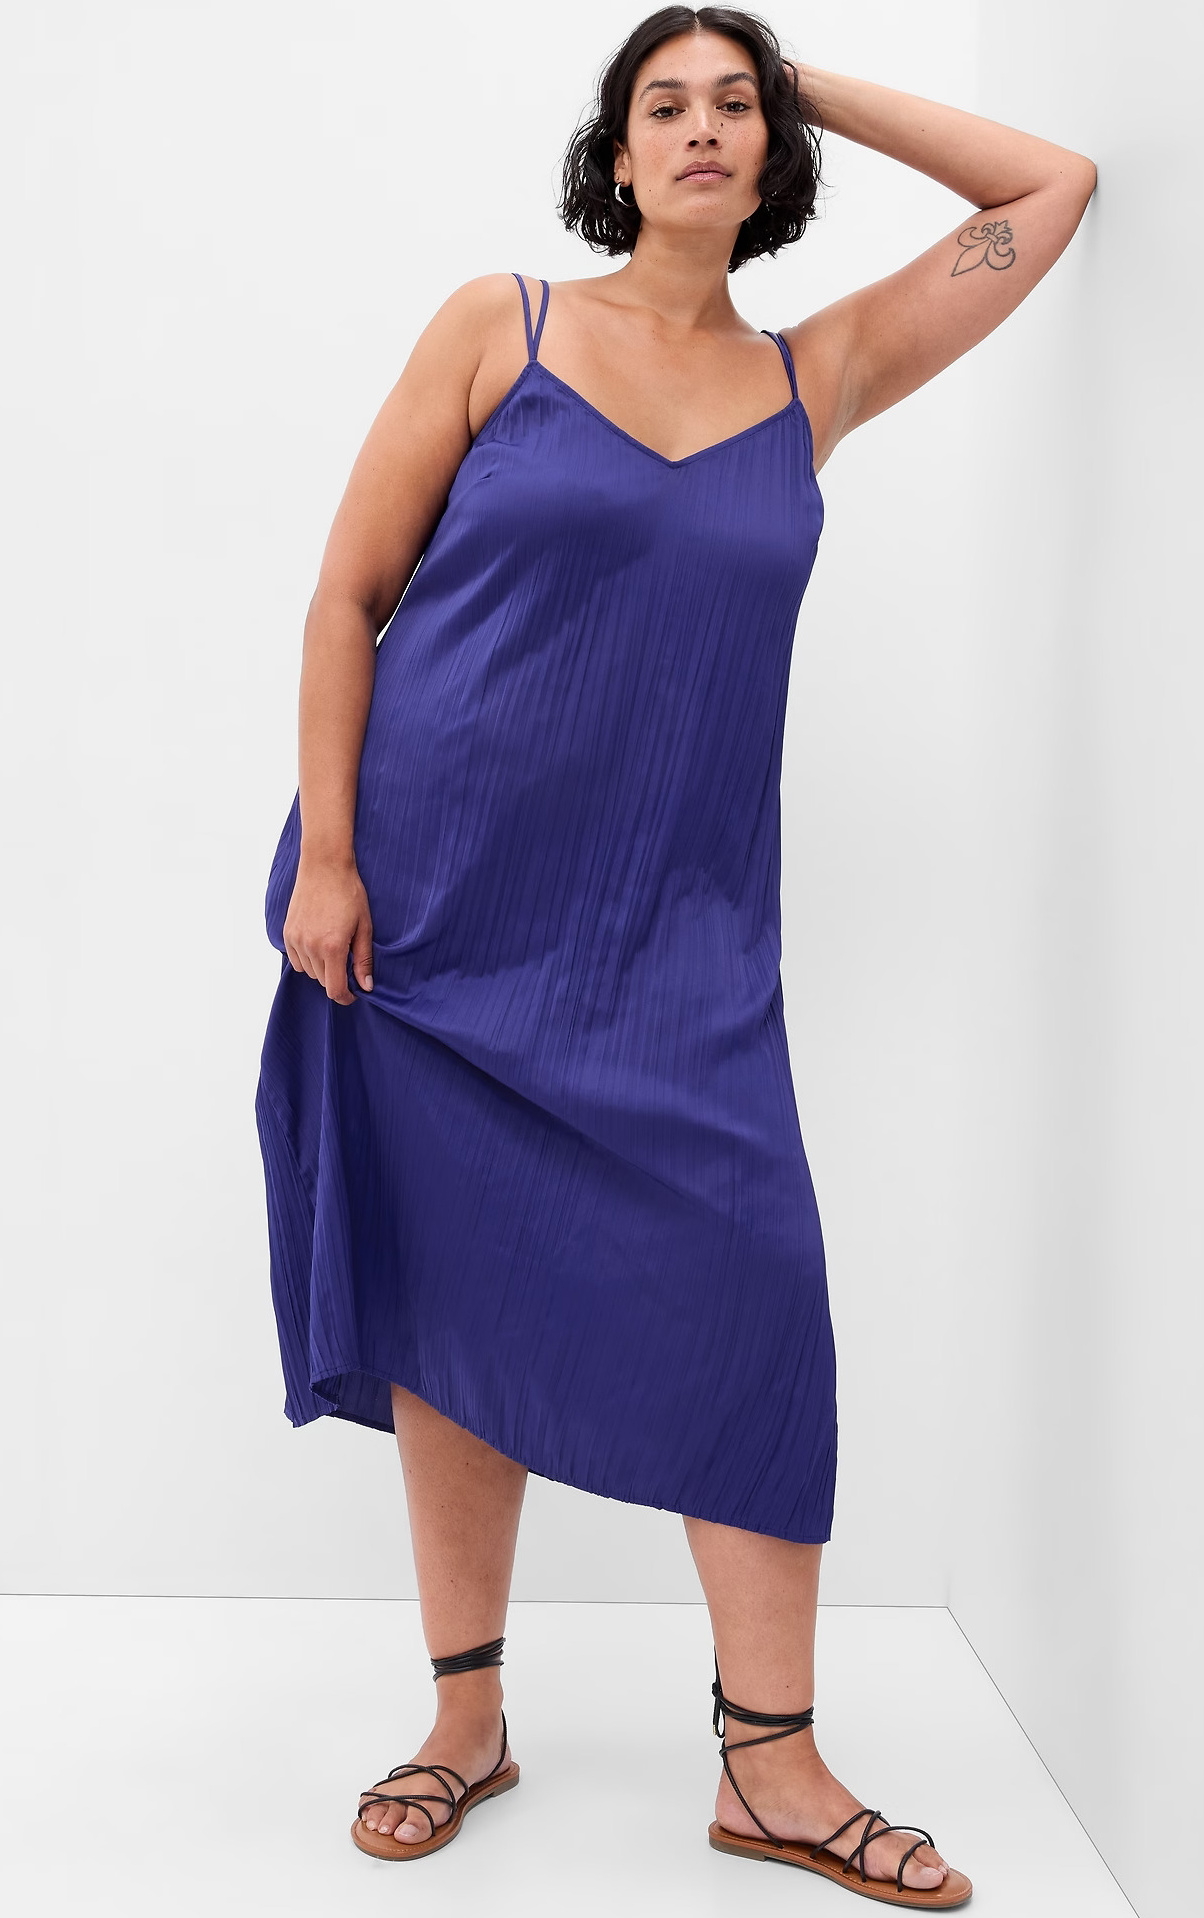 Buy Zephyrine Women's Full Slip Dress for Women Adjustable Spaghetti Strap  Cami Slip Mini Dress Nightgown, White, X-Large at Amazon.in